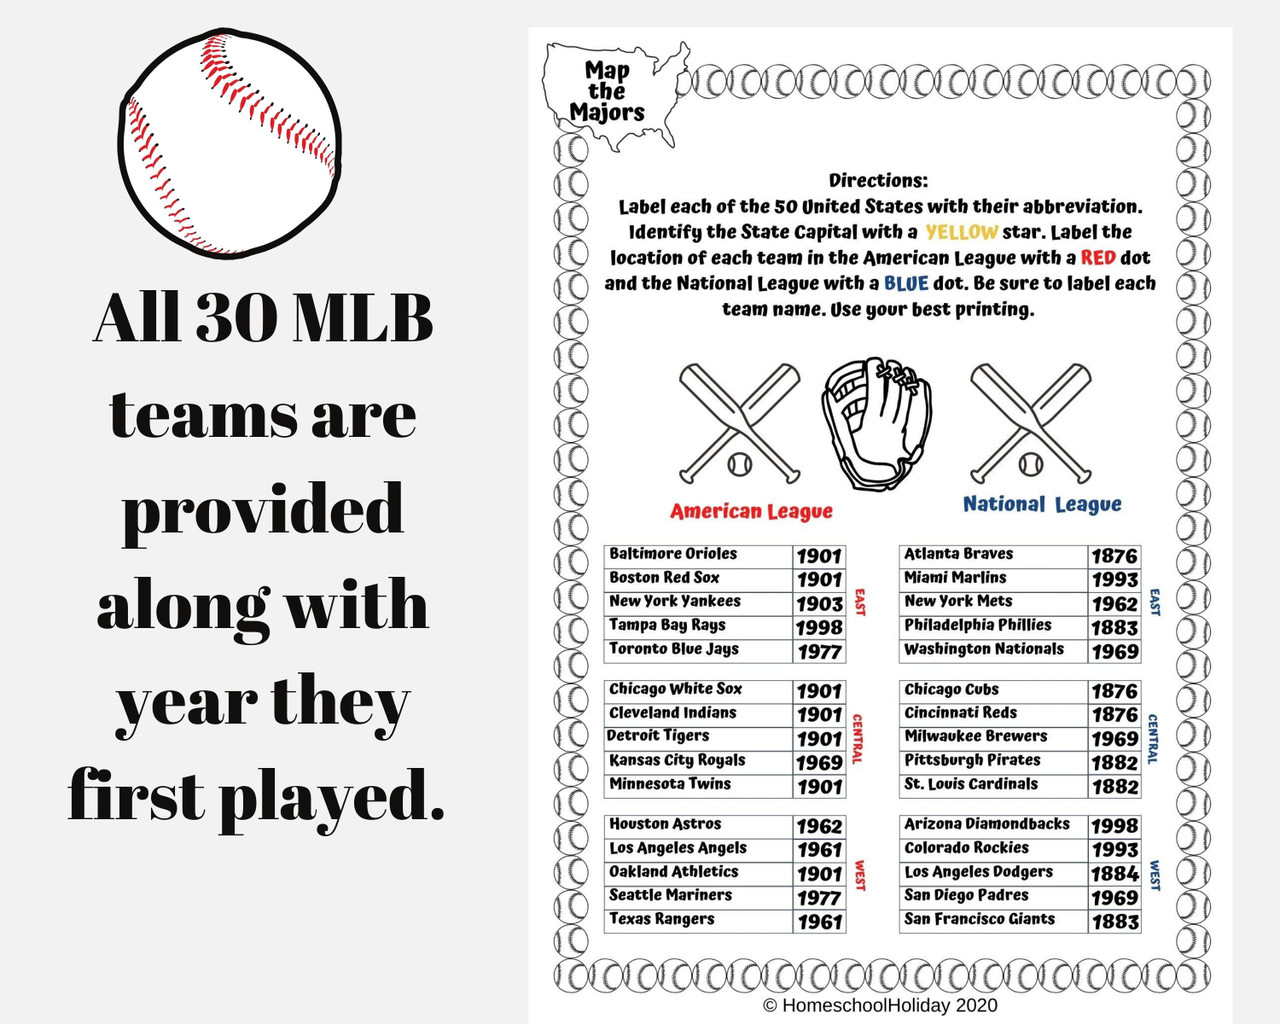 Standardized MLB All-Star Jerseys Rob Us of the Joy of Each Team's